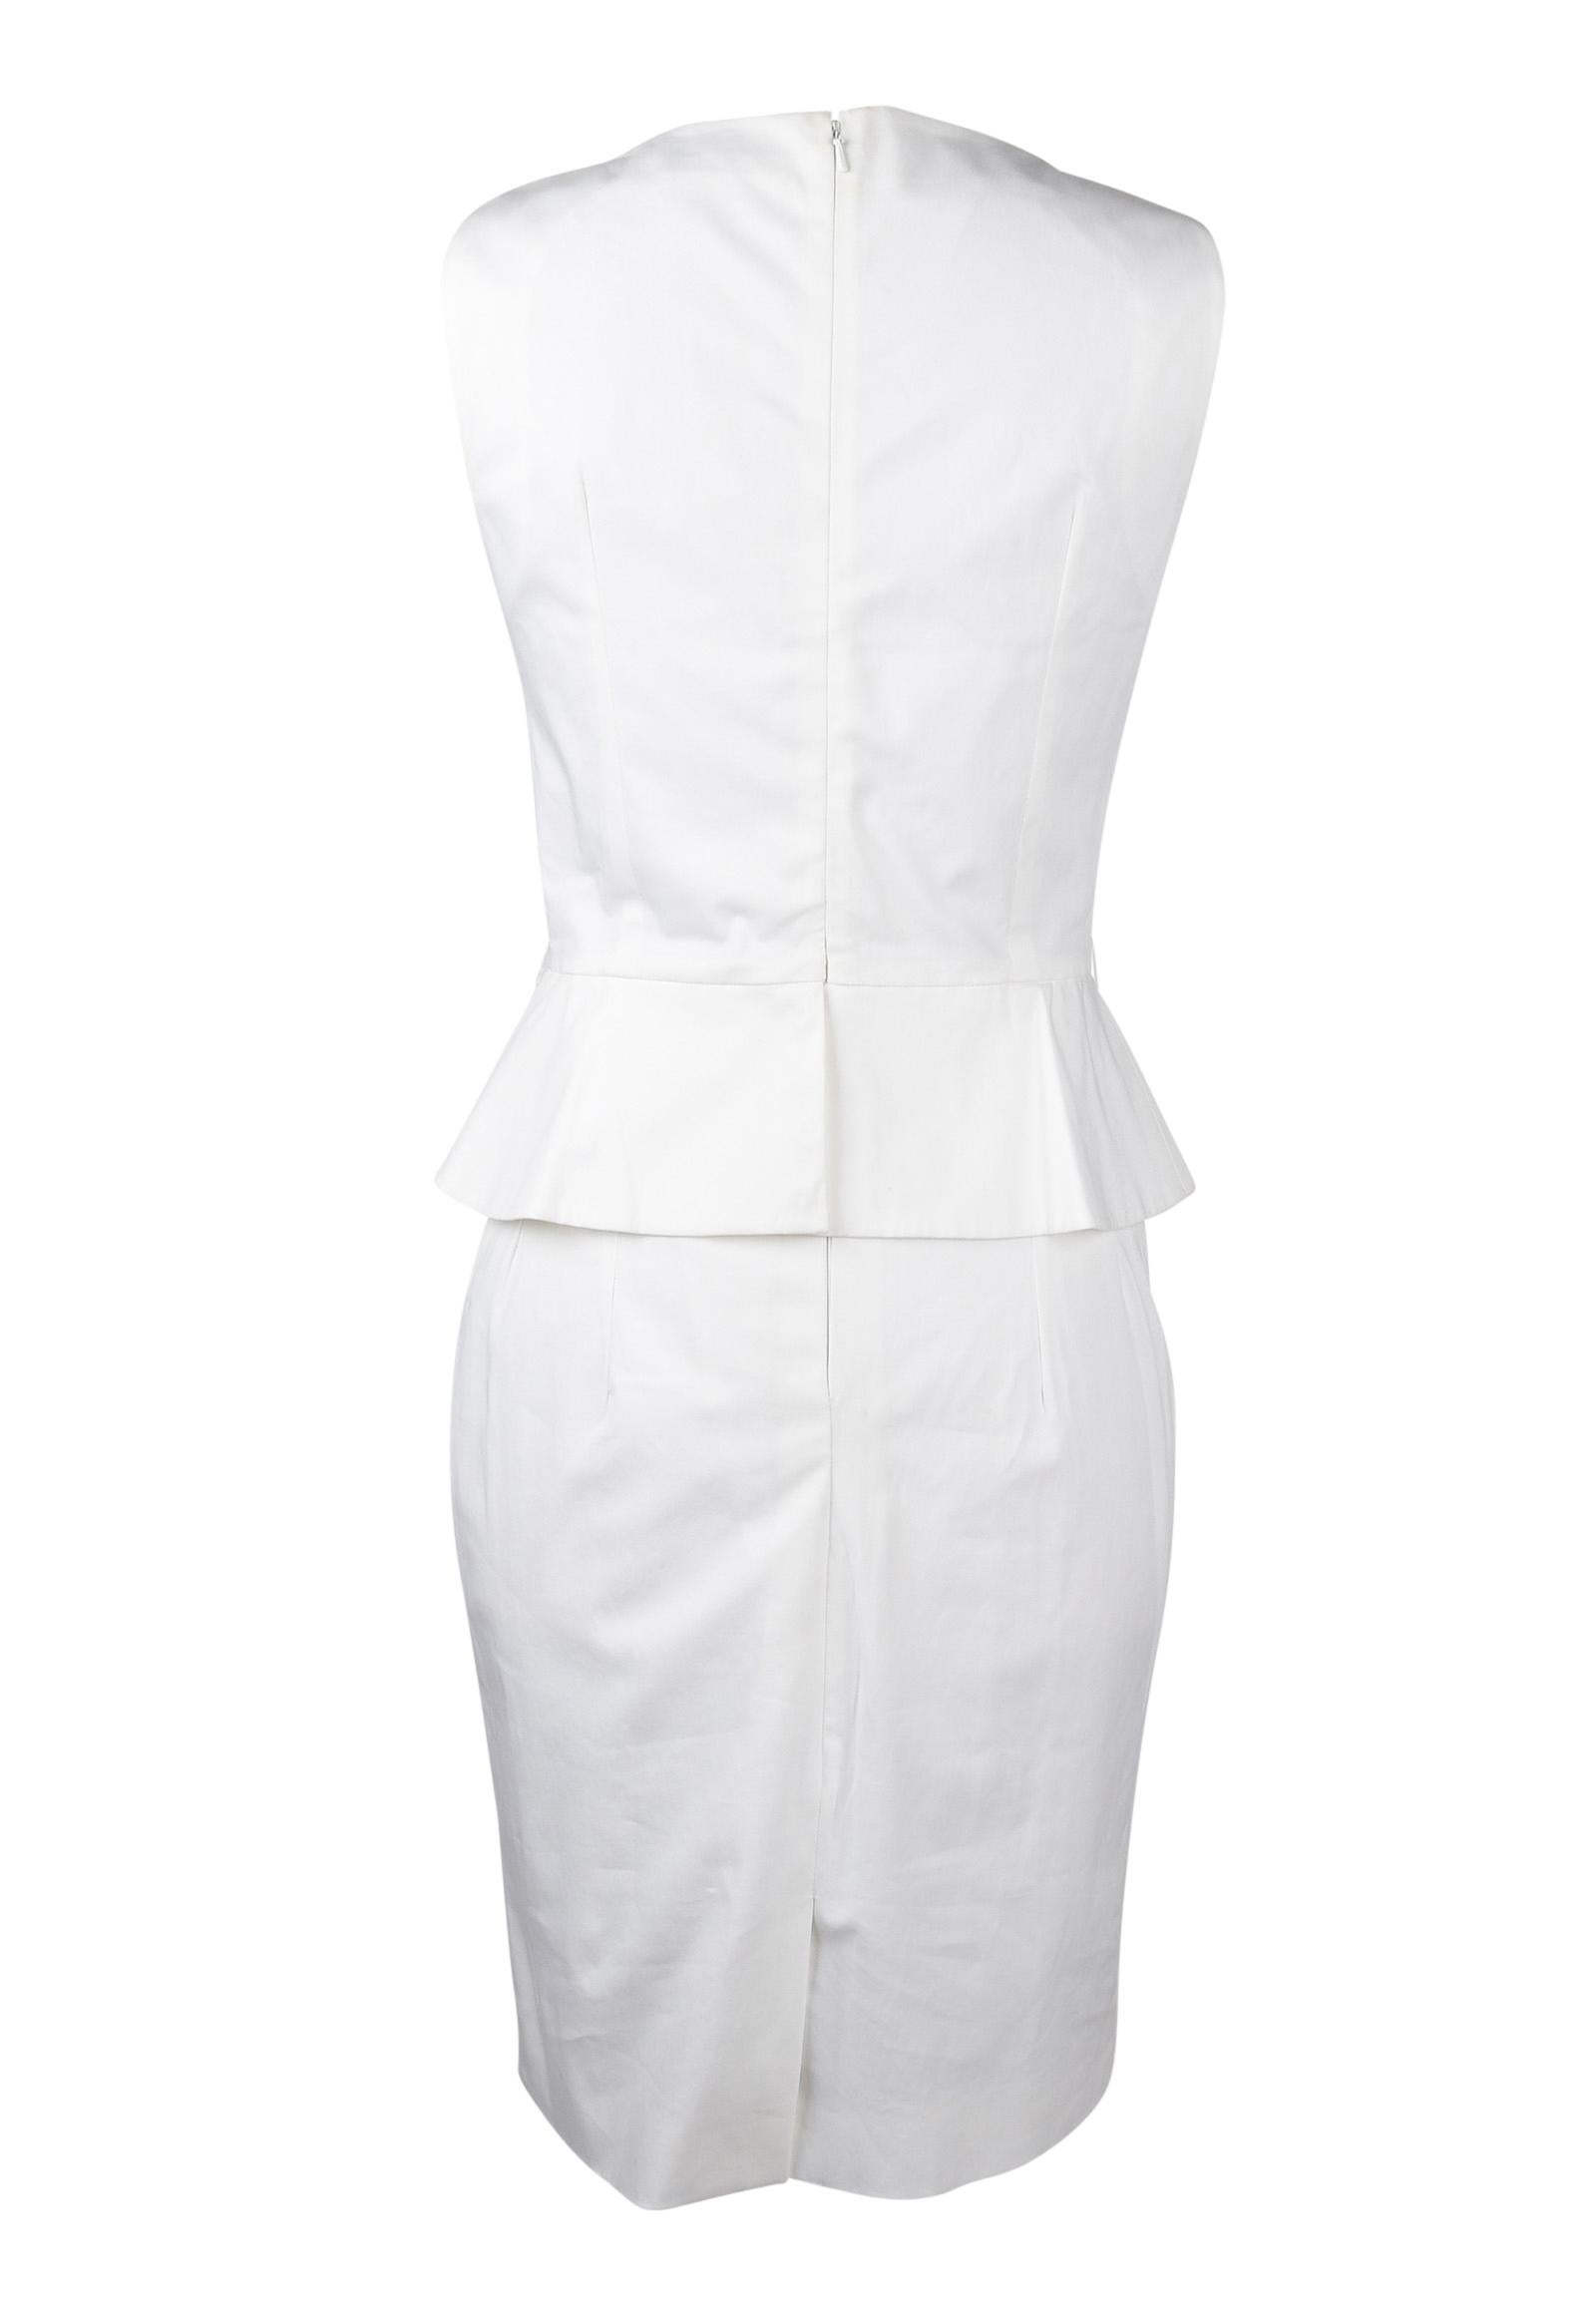 Christian Dior Dress White Cotton Peplum 8 Mint  1